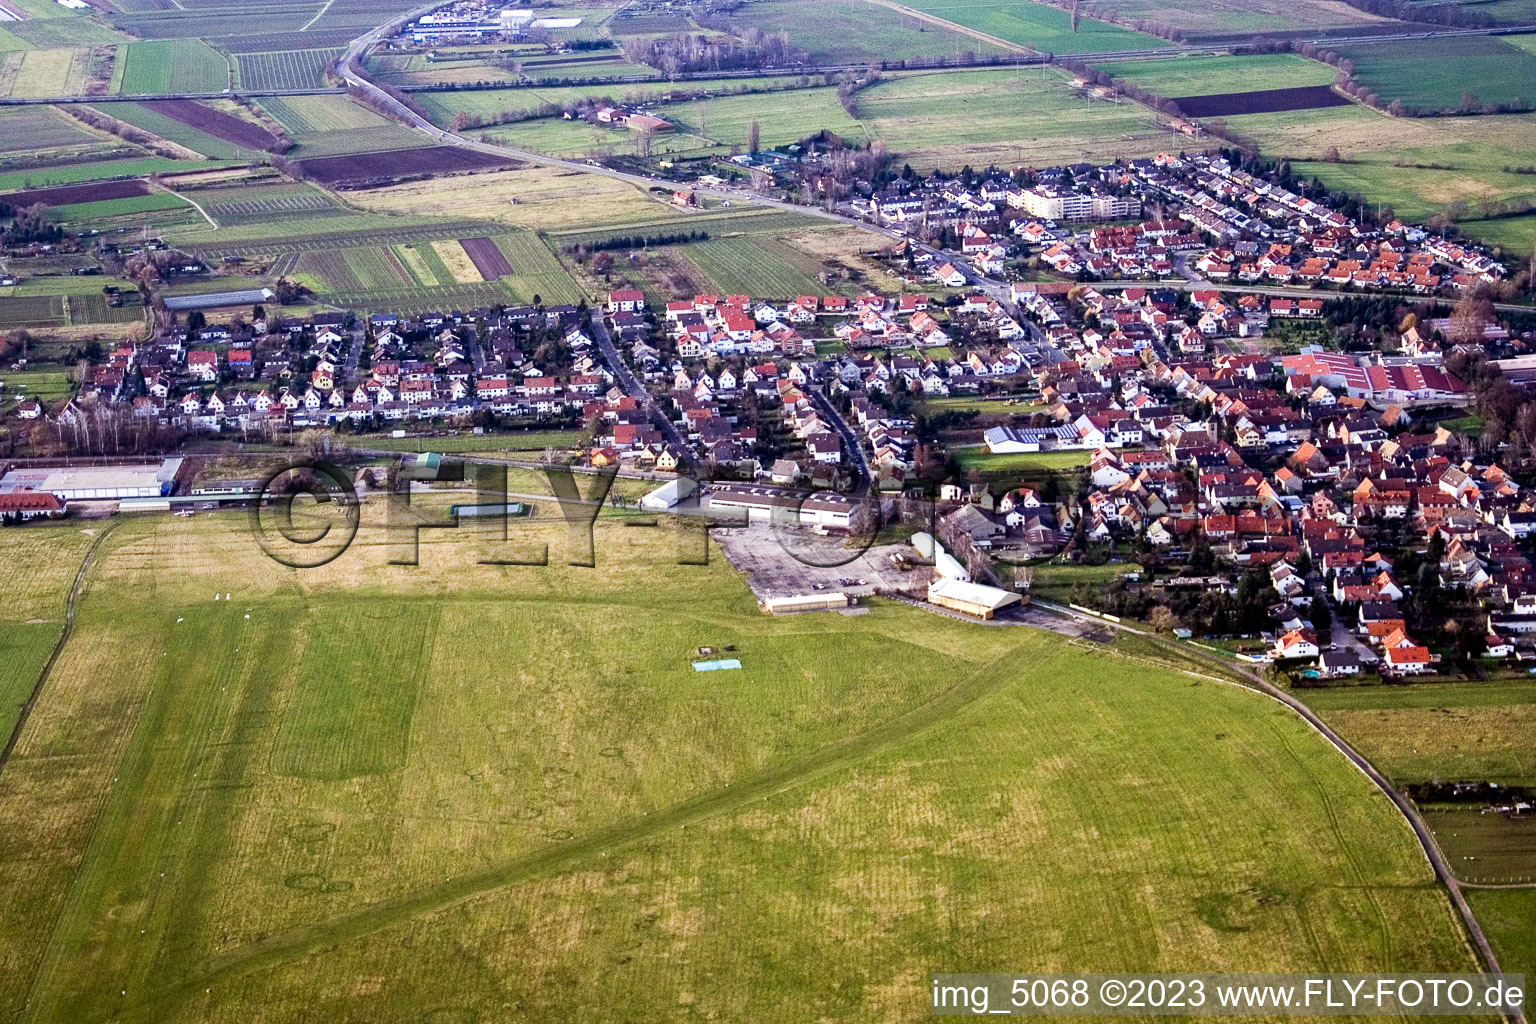 Aerial view of Laughter-Speyerdorf, airfield in the district Speyerdorf in Neustadt an der Weinstraße in the state Rhineland-Palatinate, Germany